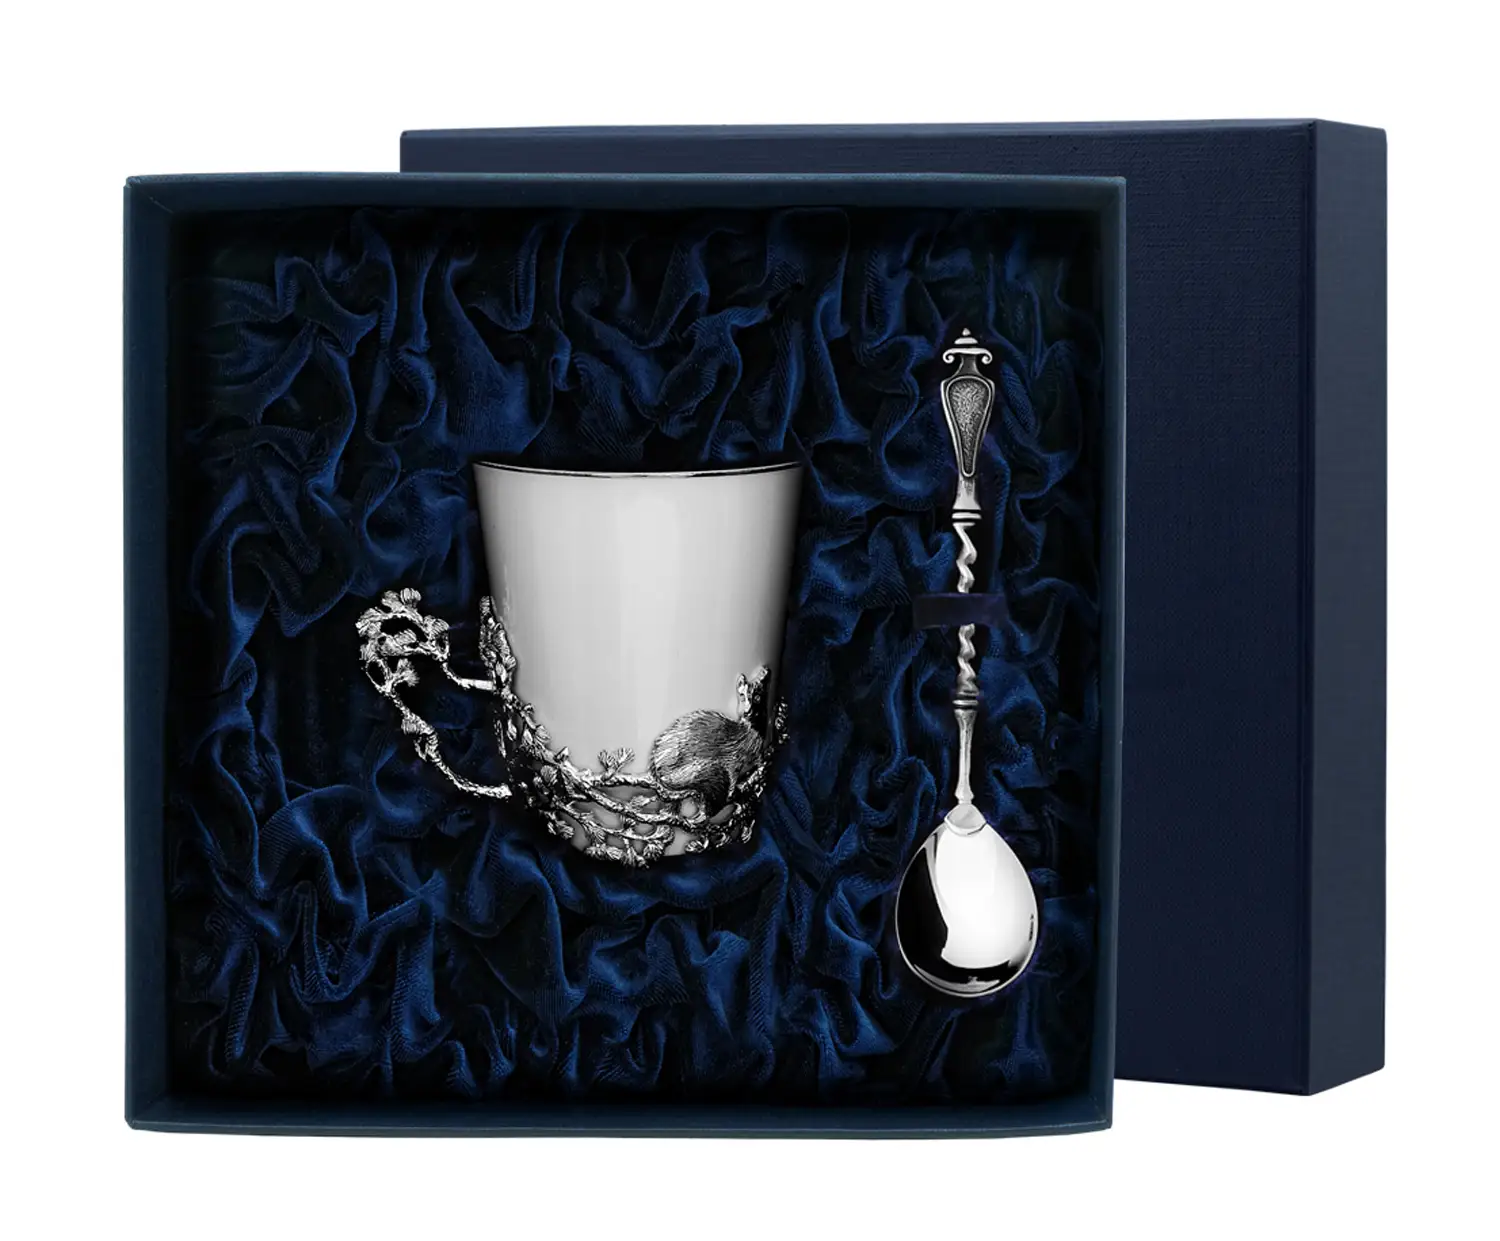 Набор чайная чашка Куница: ложка, чашка (Серебро 925) набор чайная чашка витая ложка чашка серебро 925